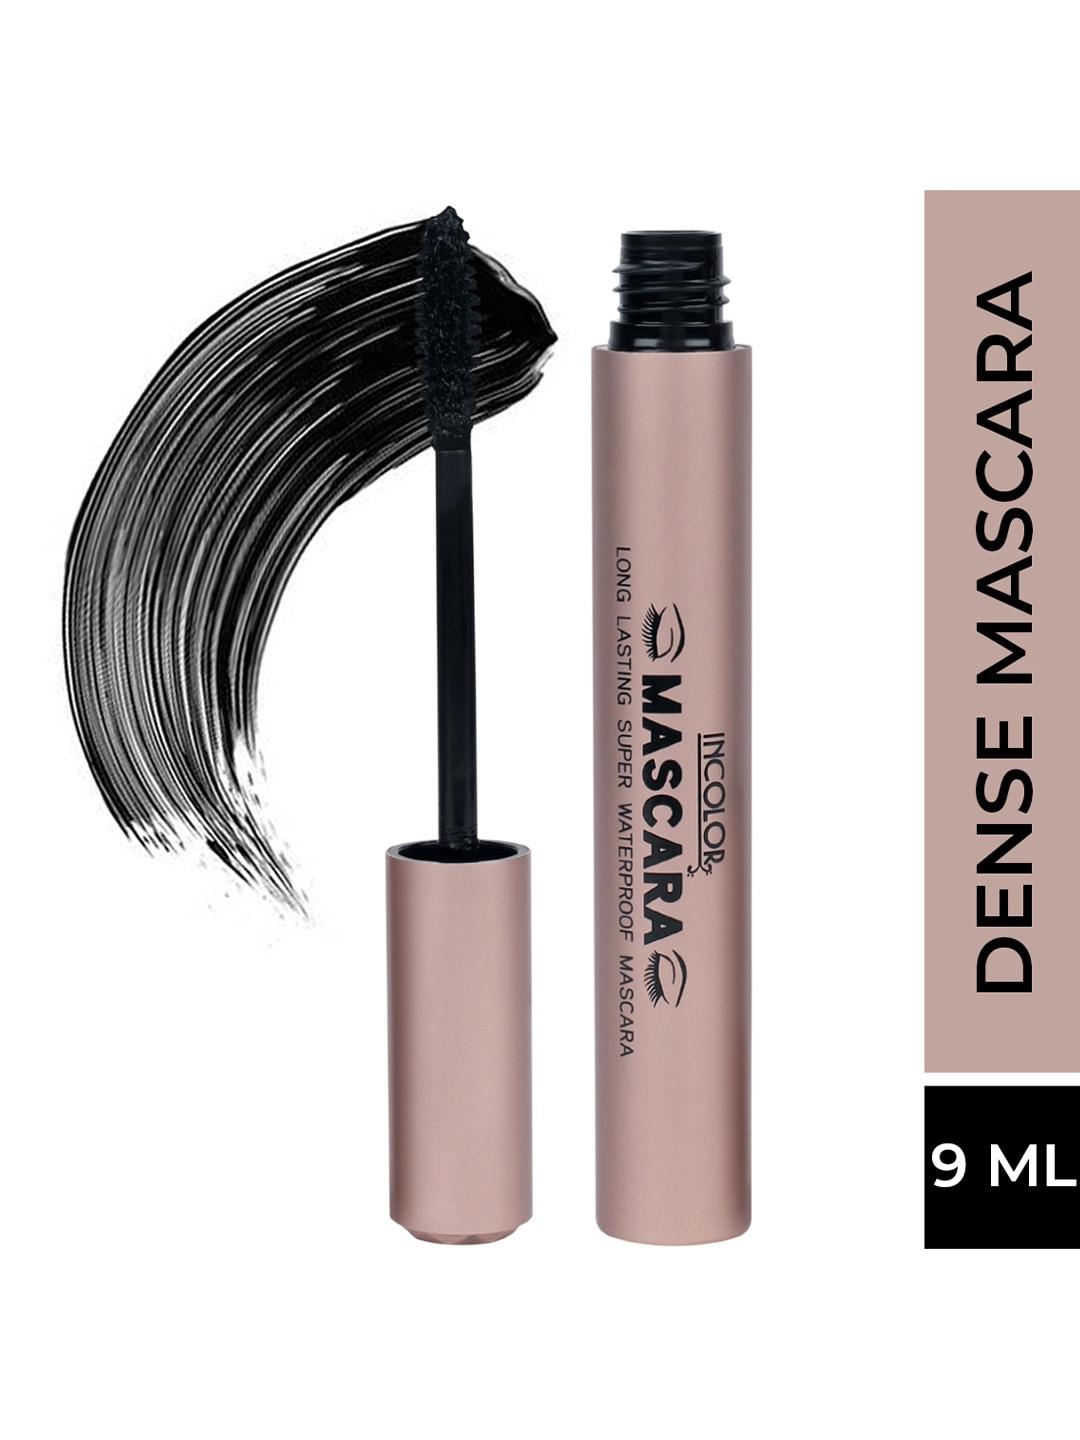 incolor dense long lasting super waterproof mascara - black 9ml